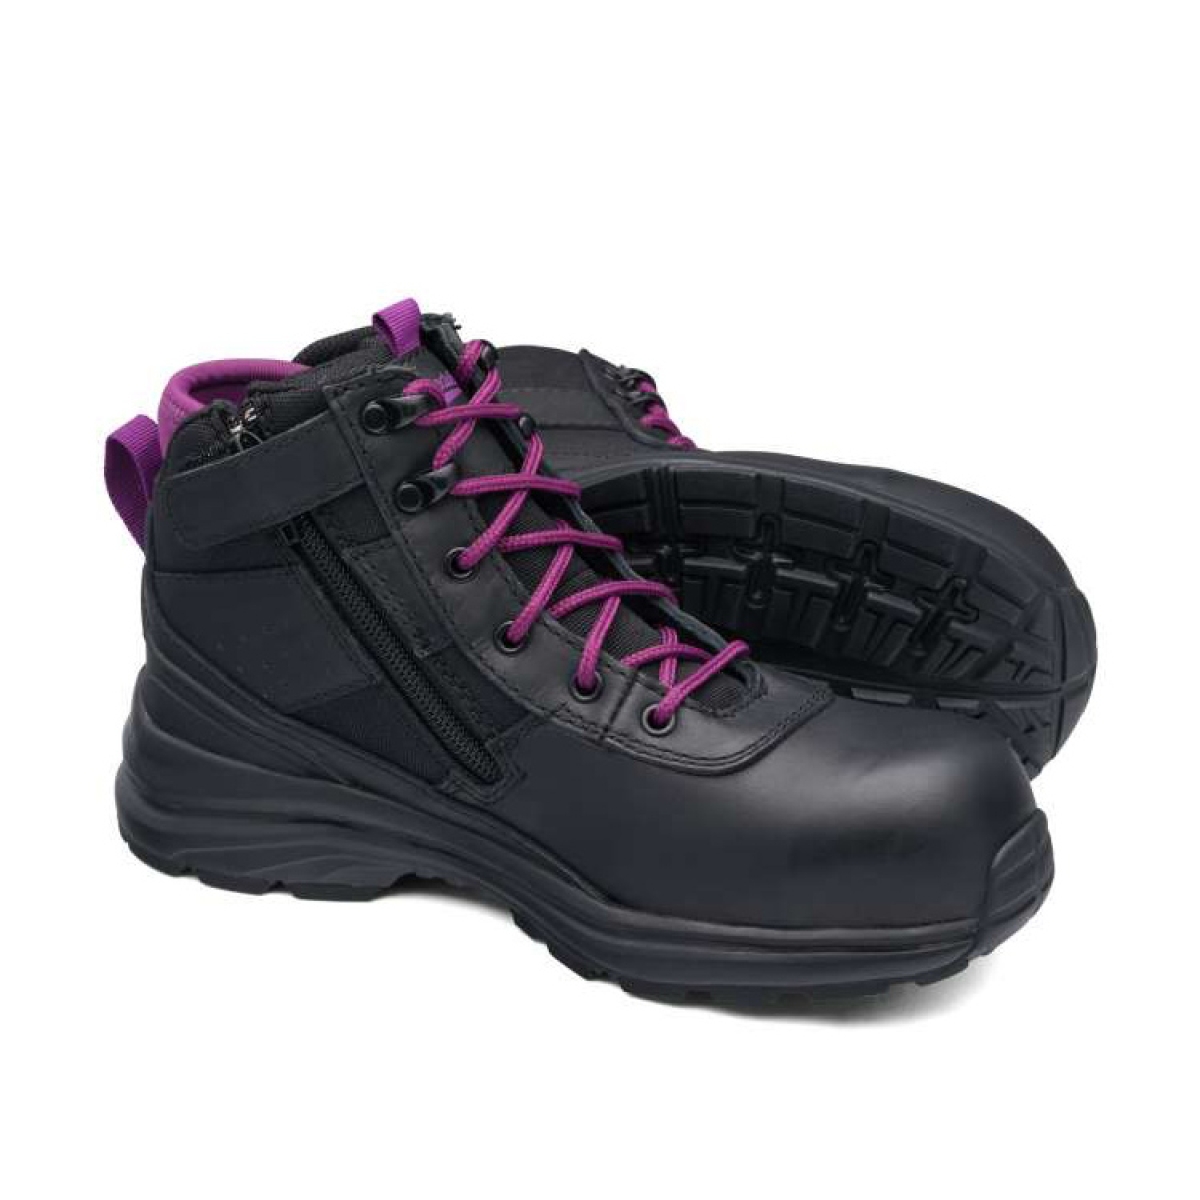 Blundstone 887 Women's Safety Hiker Boot